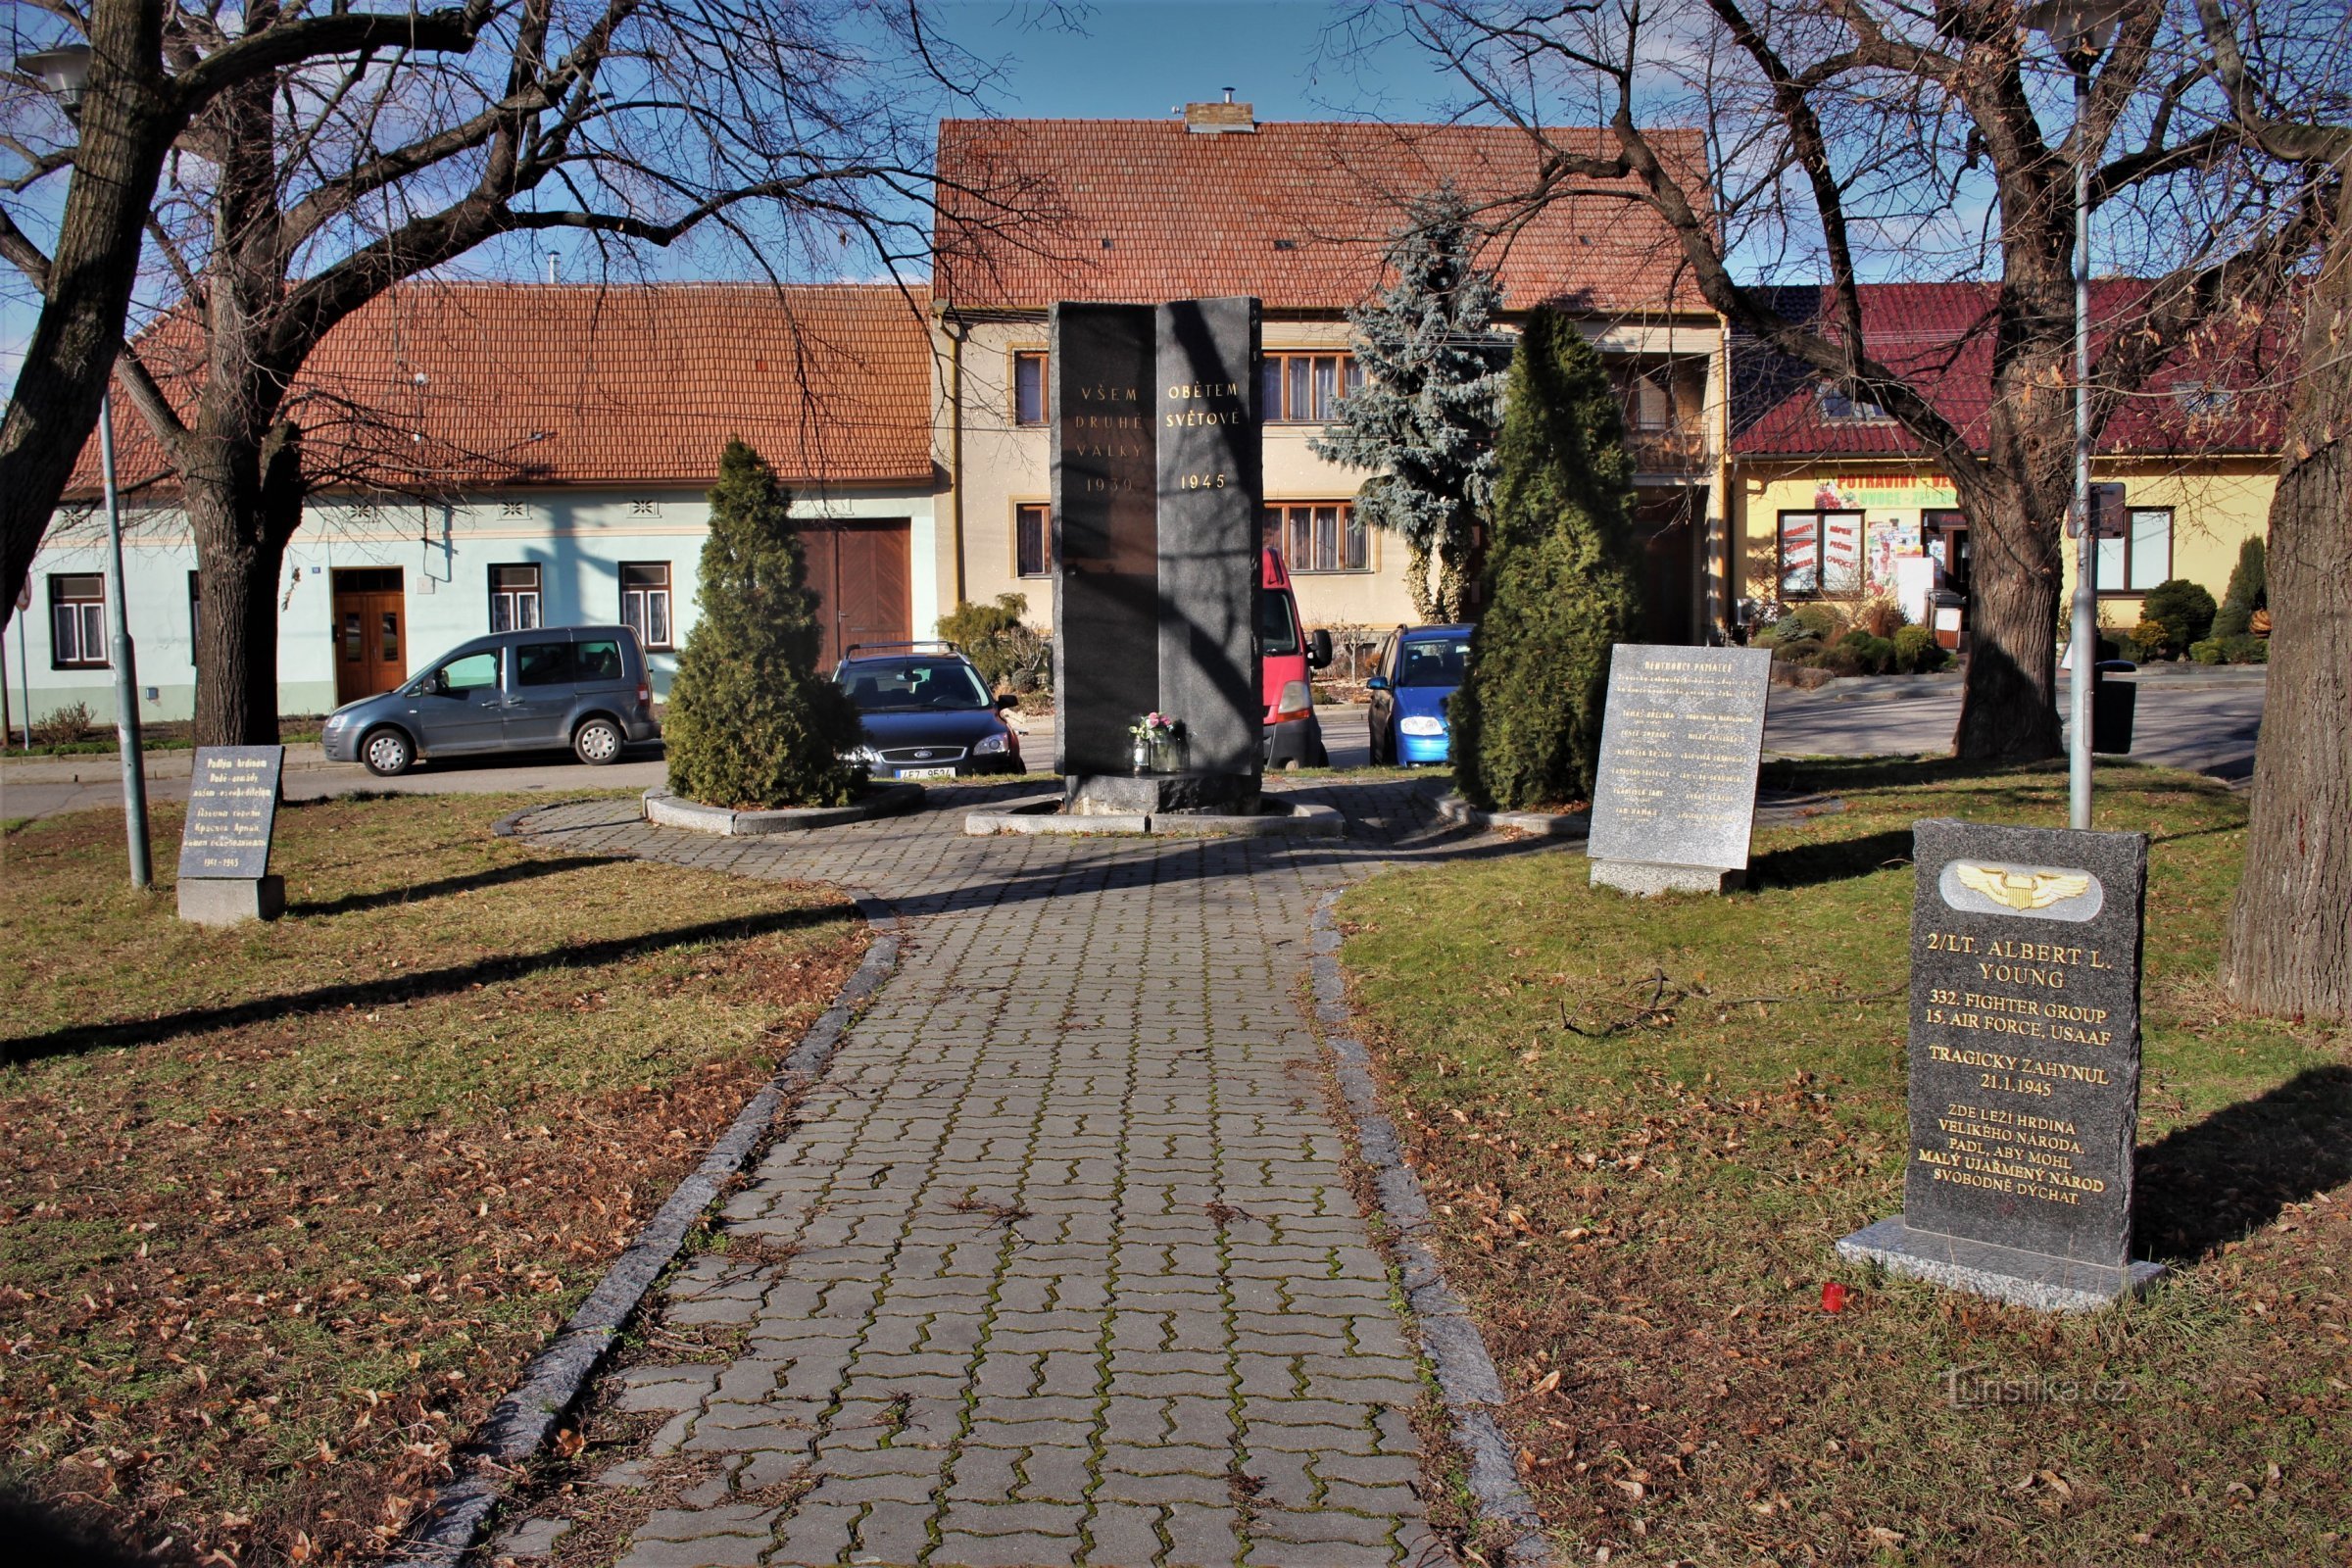 Spomenik je dio bogomolje na Náměstí Svobody u središtu sela